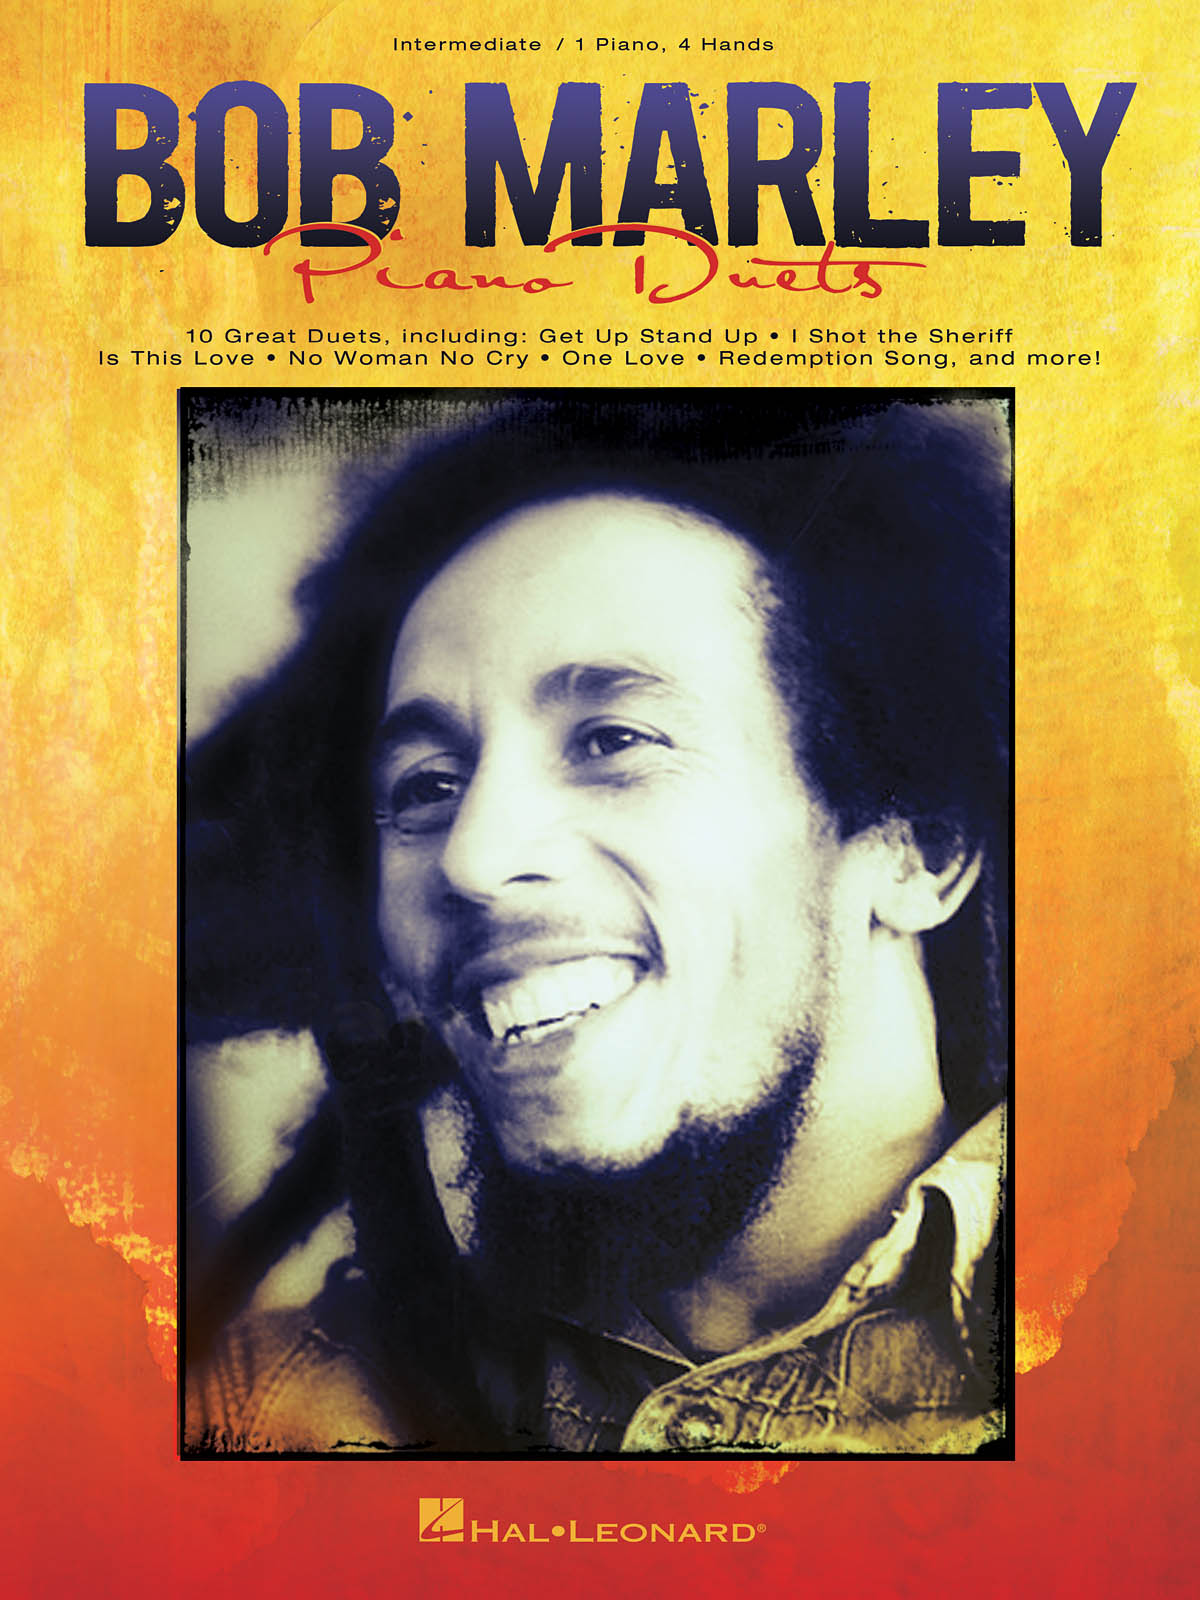 Bob Marley for Piano Duet - Intermediate Piano Duet (1 Piano, 4 Hands) - noty pro čtyřruční klavír